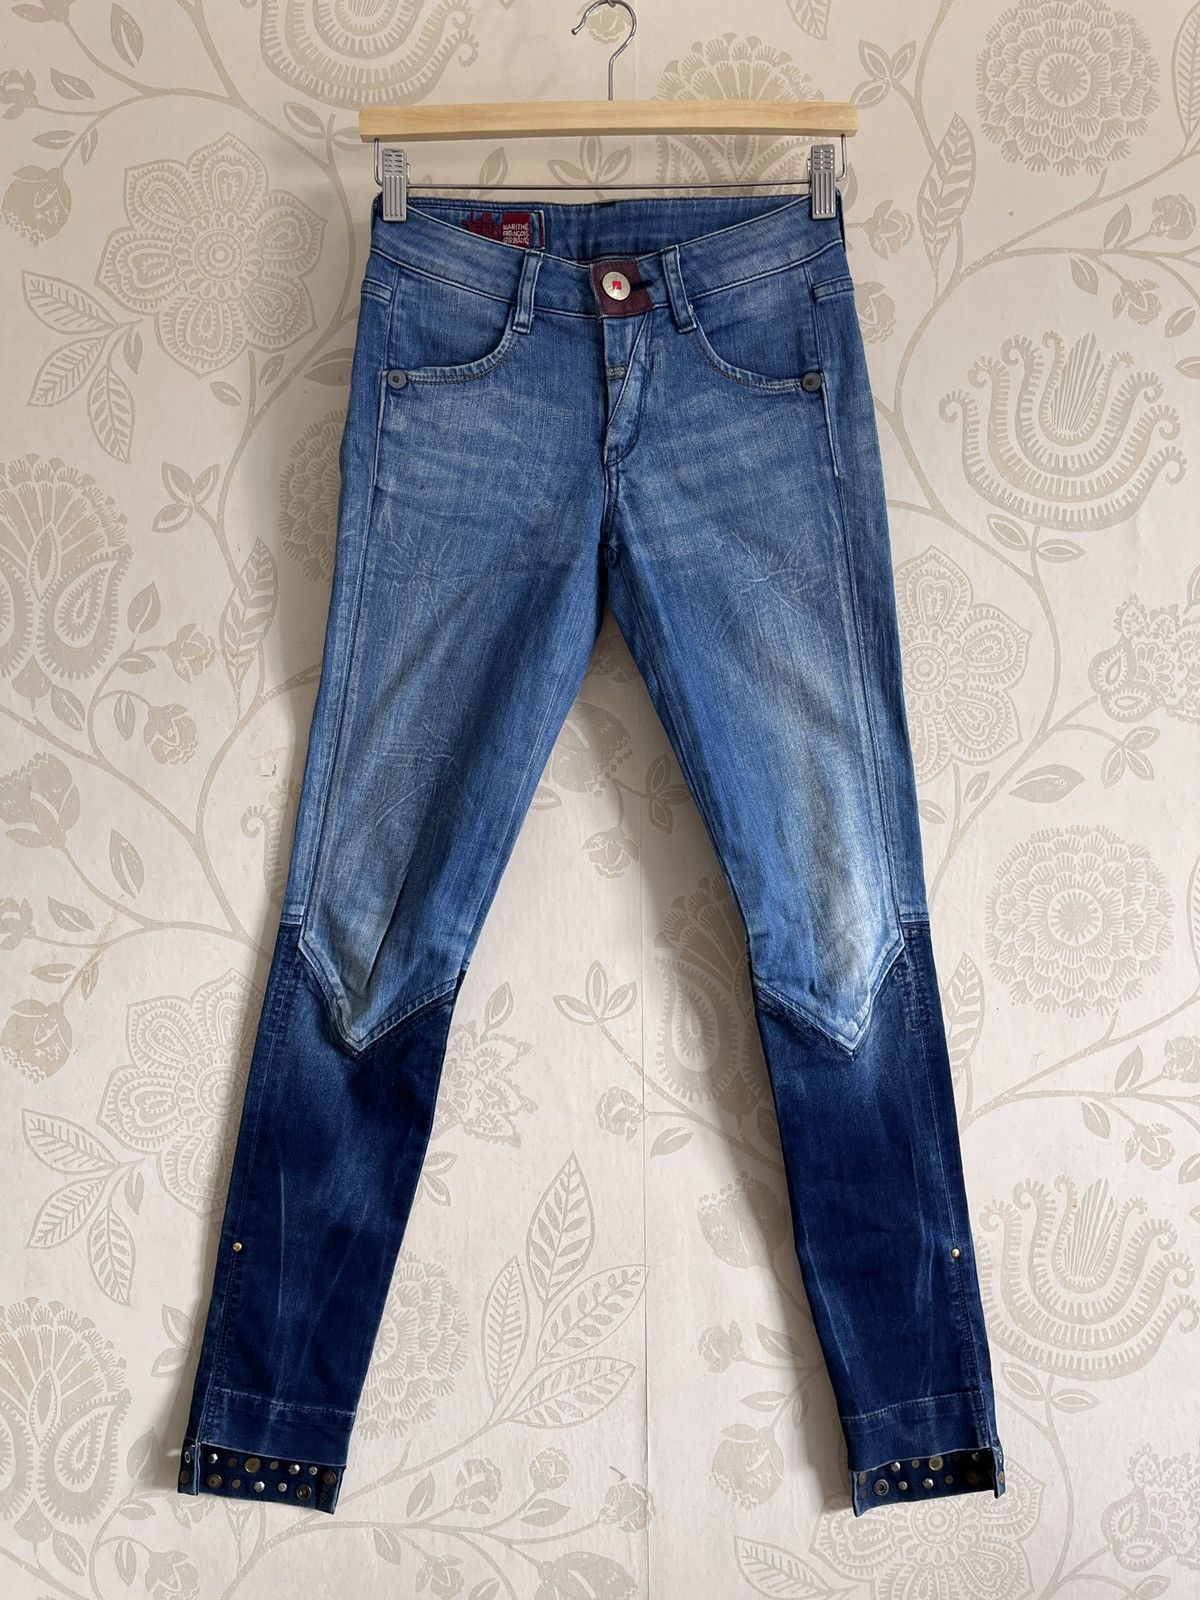 Marithe Francois Girbaud Skinny Ankle Signage Denim Jeans - 24